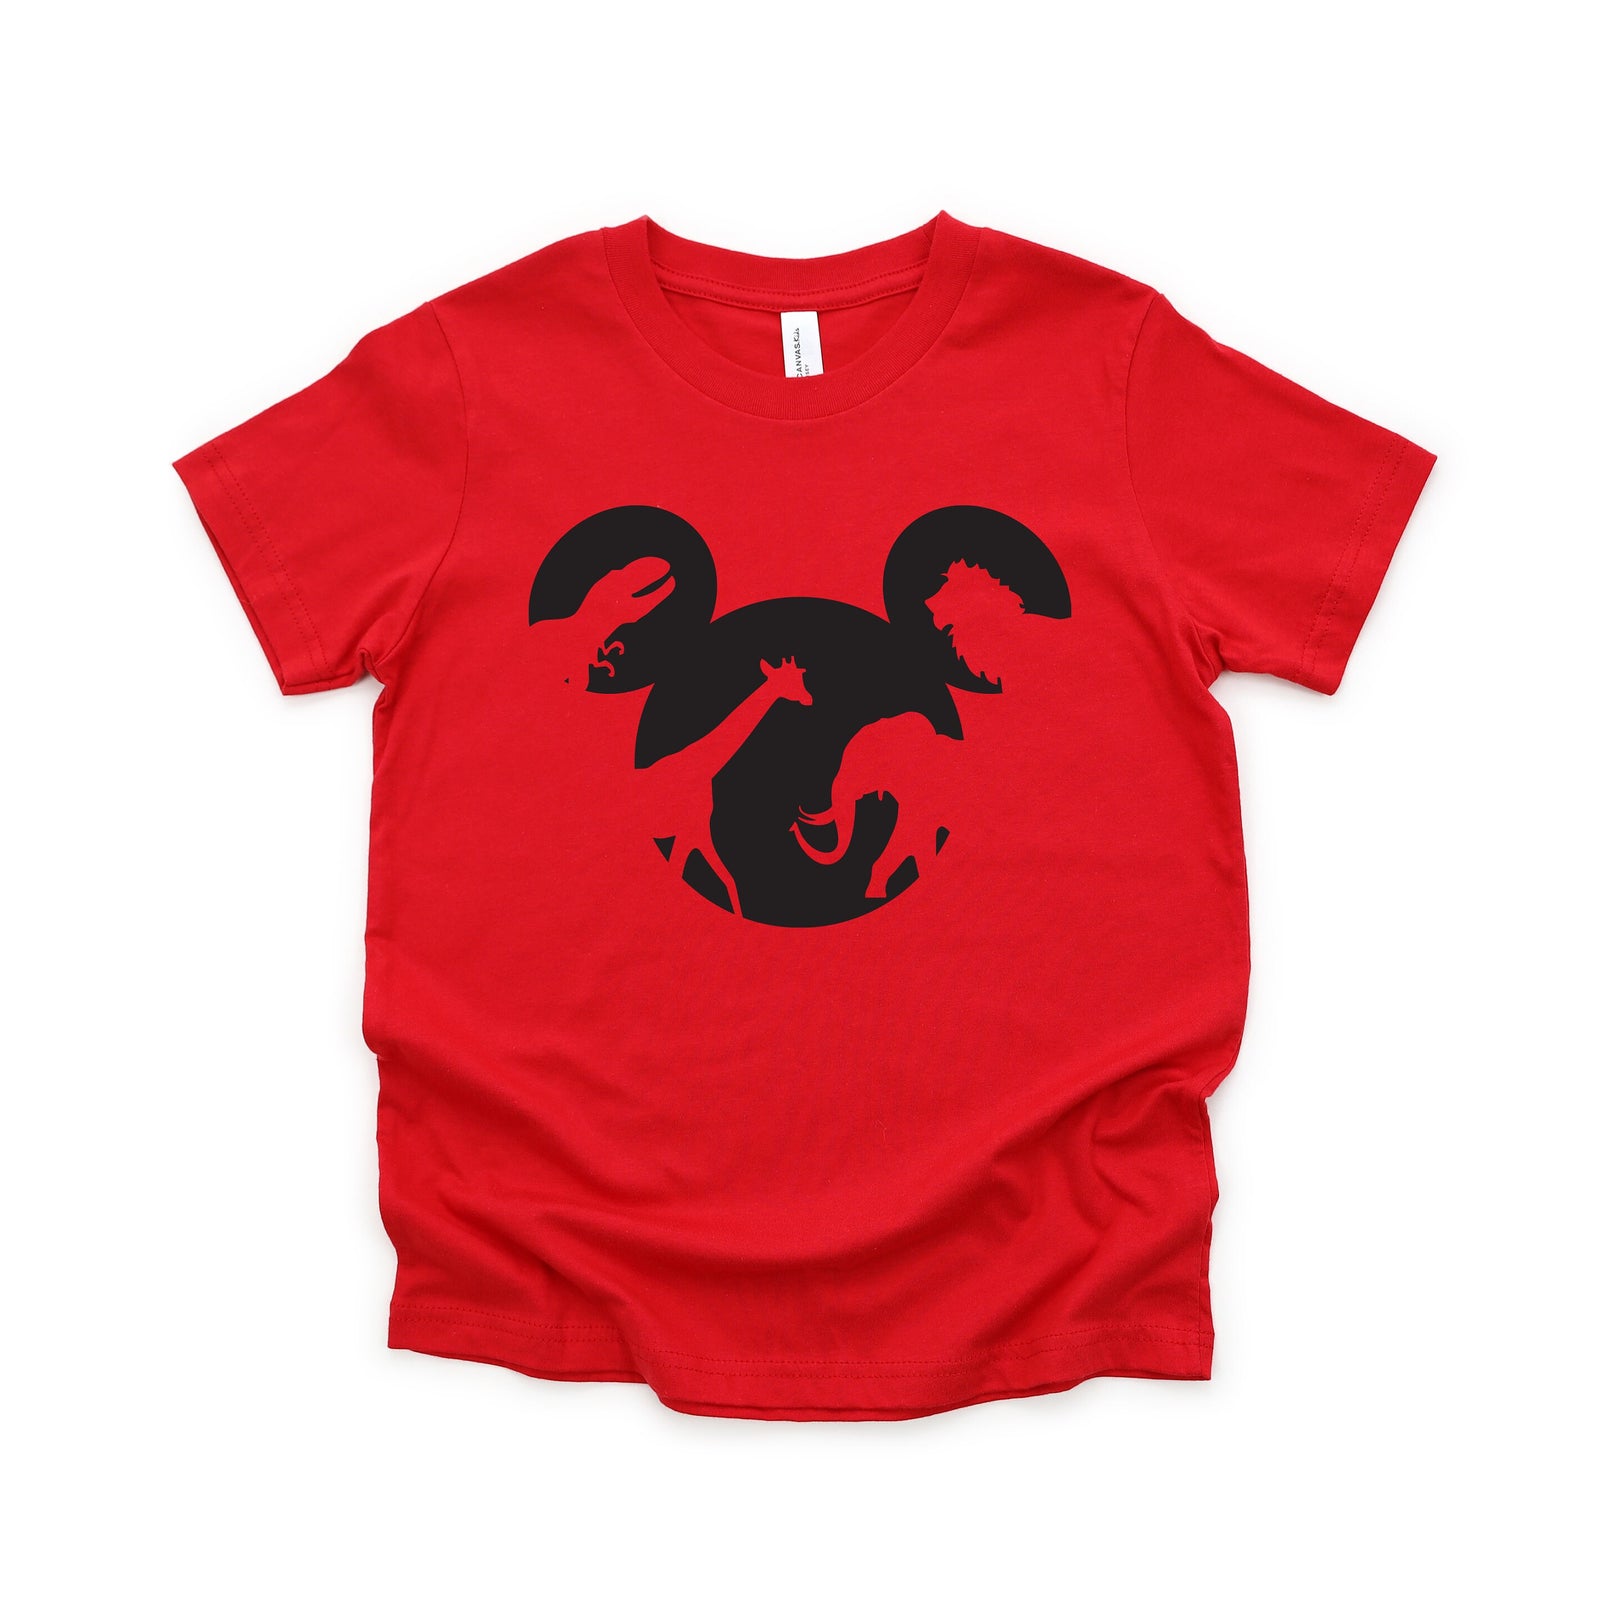 Mickey Safari Shirt - Infant - Toddler - Youth - Animal Kingdom T Shirt for Kids